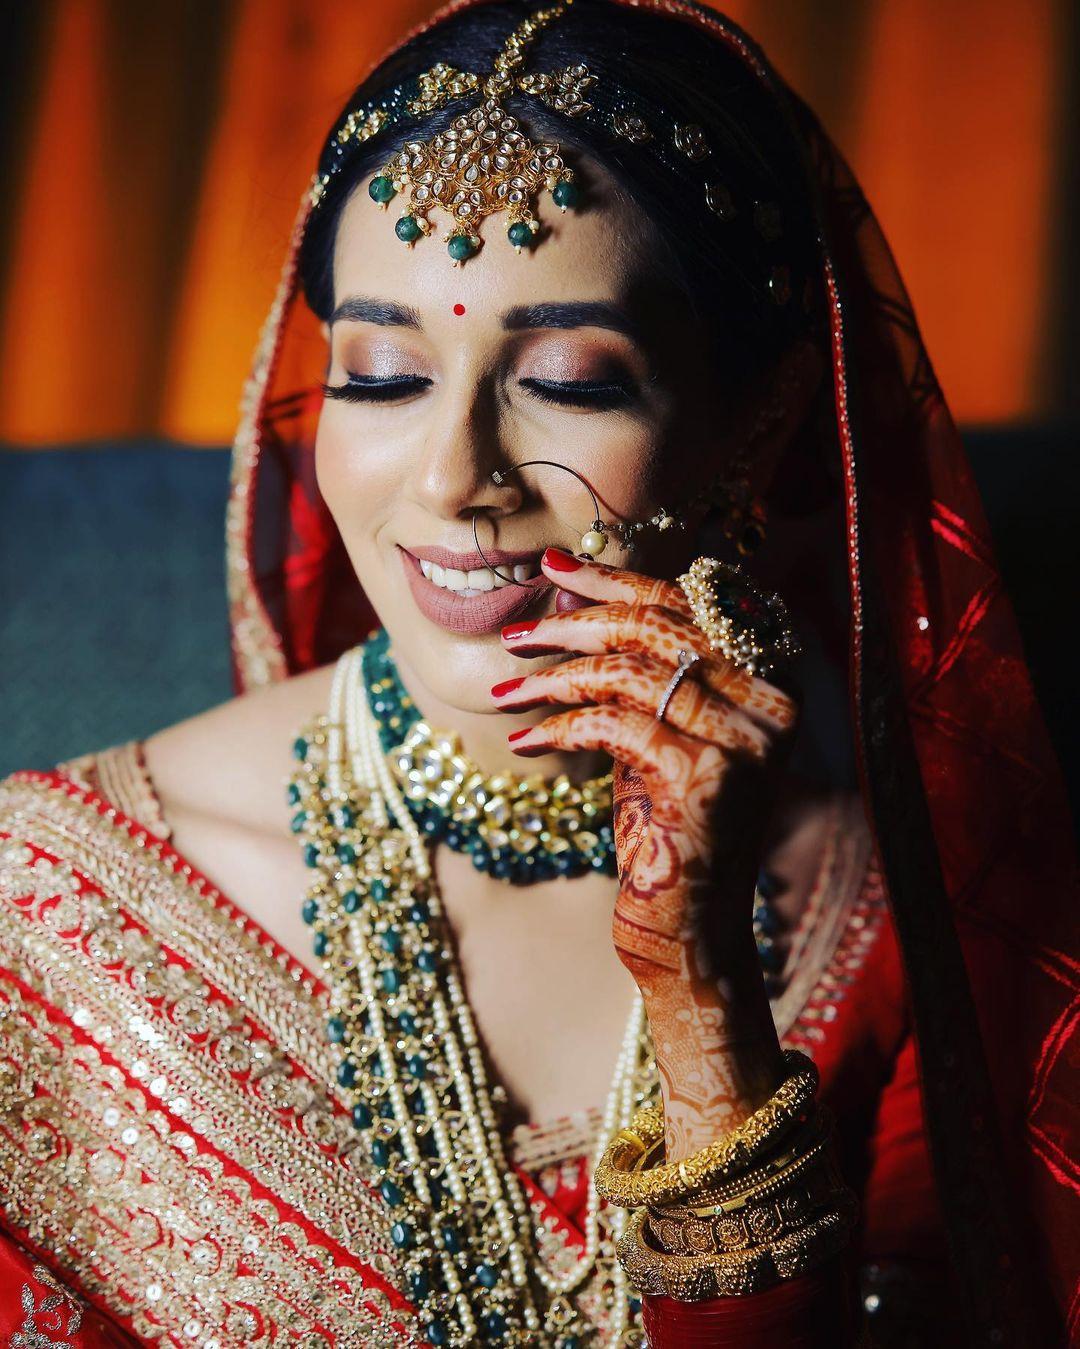 Beautiful Nauvari Sarees We Spotted On These Real Maharashtrian Brides! |  Indian wedding poses, Bridal photography poses, Beautiful indian brides